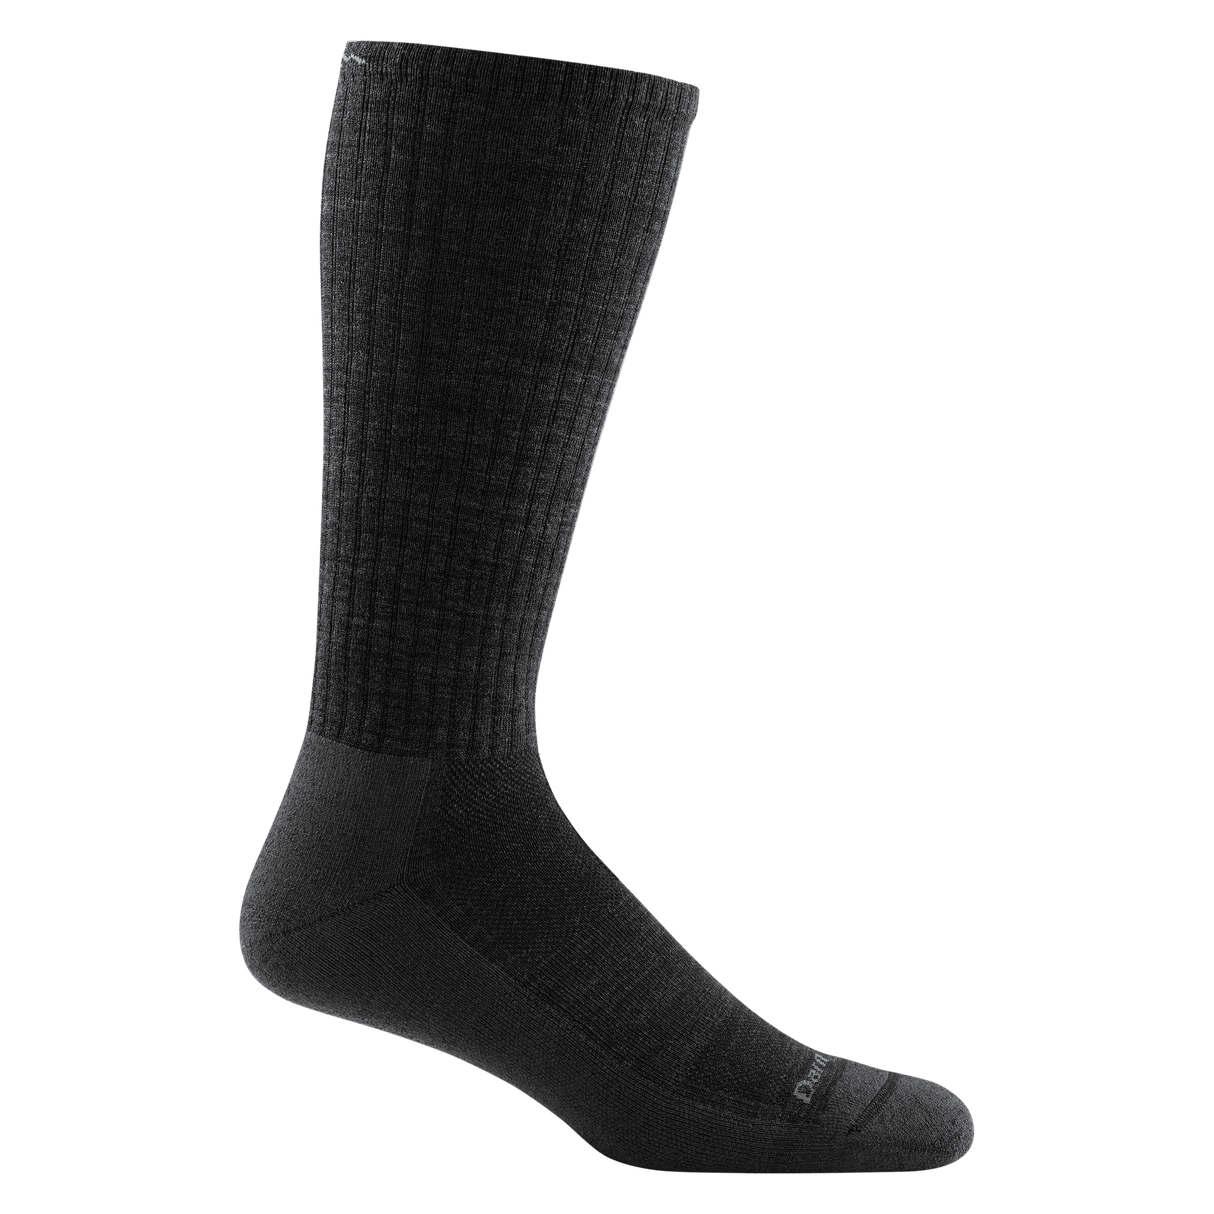 Darn Tough Mens The Standard Mid-Calf No Cushion Lightweight Lifestyle Socks  -  Medium / Charcoal